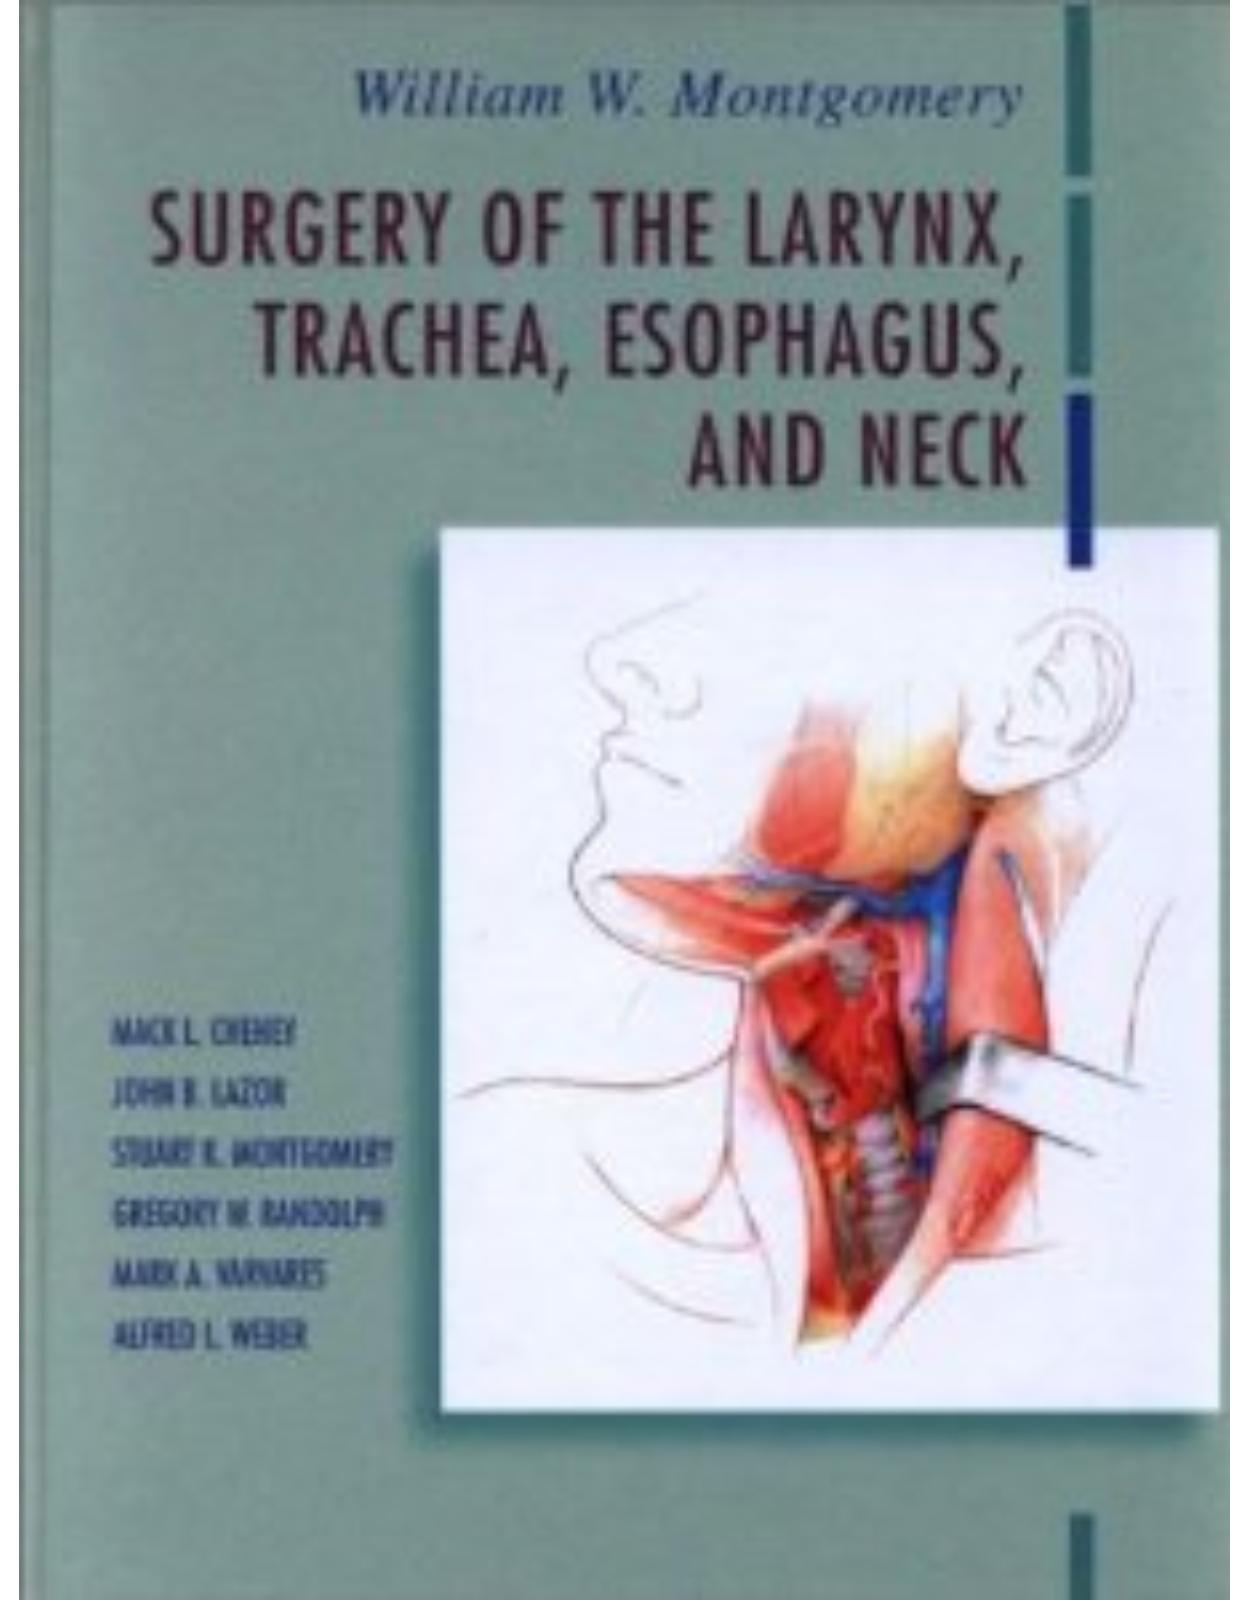 Surgery of the Larynx, Trachea, Esophagus and Neck